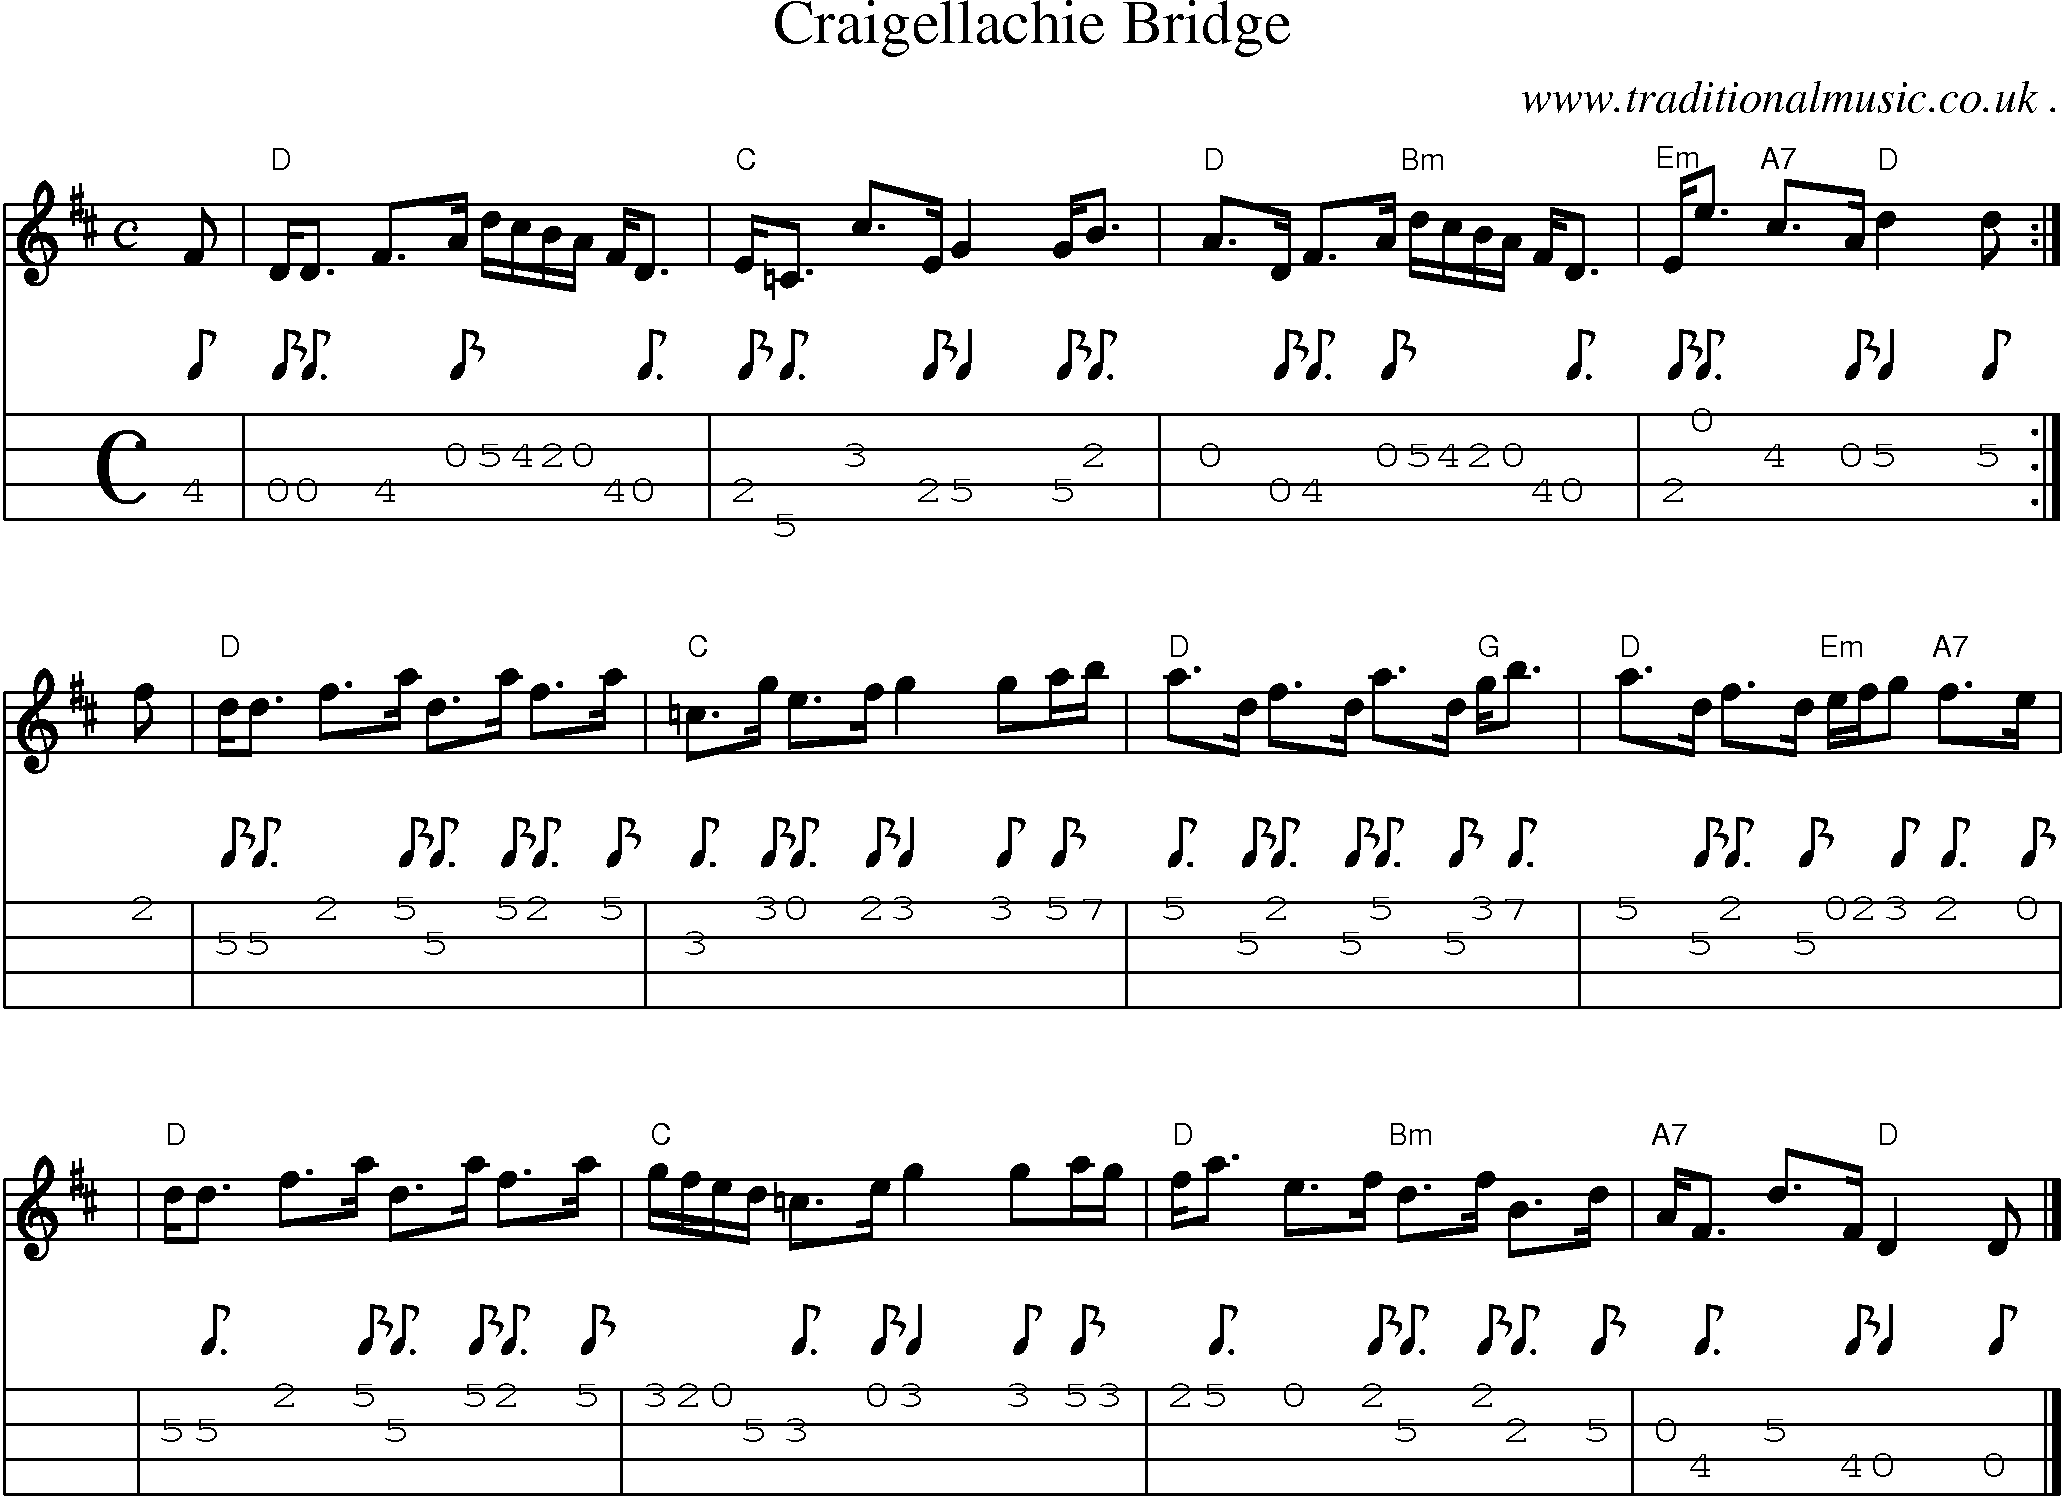 Sheet-music  score, Chords and Mandolin Tabs for Craigellachie Bridge